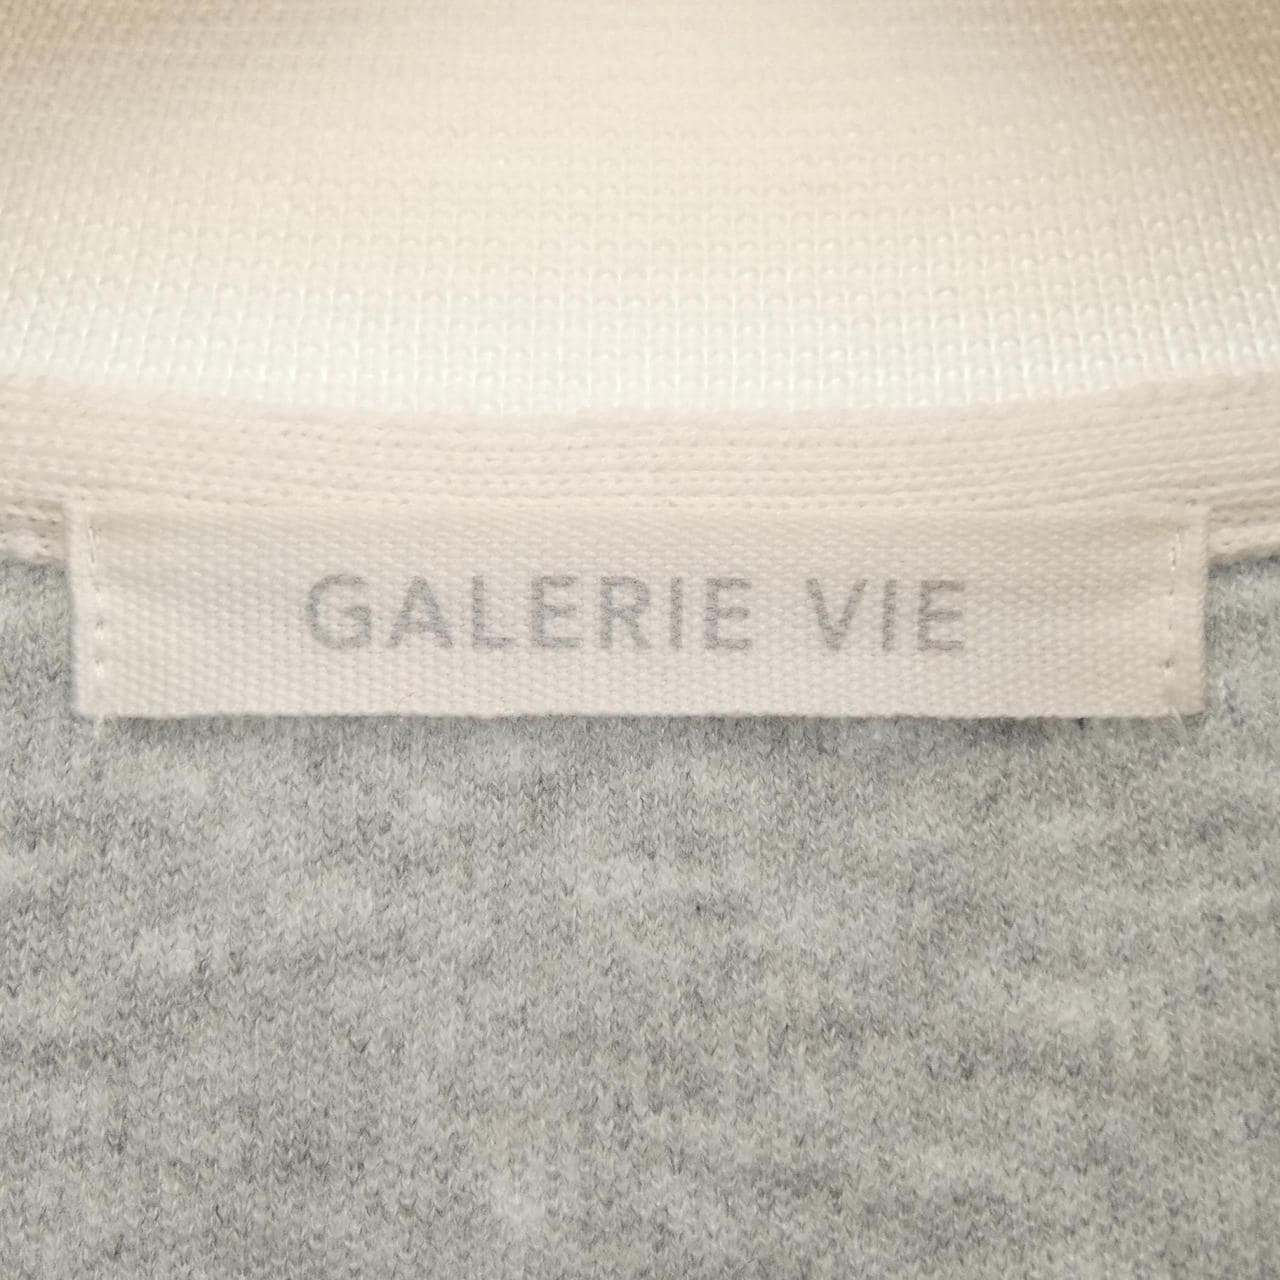 GALLEY GALERIE VIE针织衫